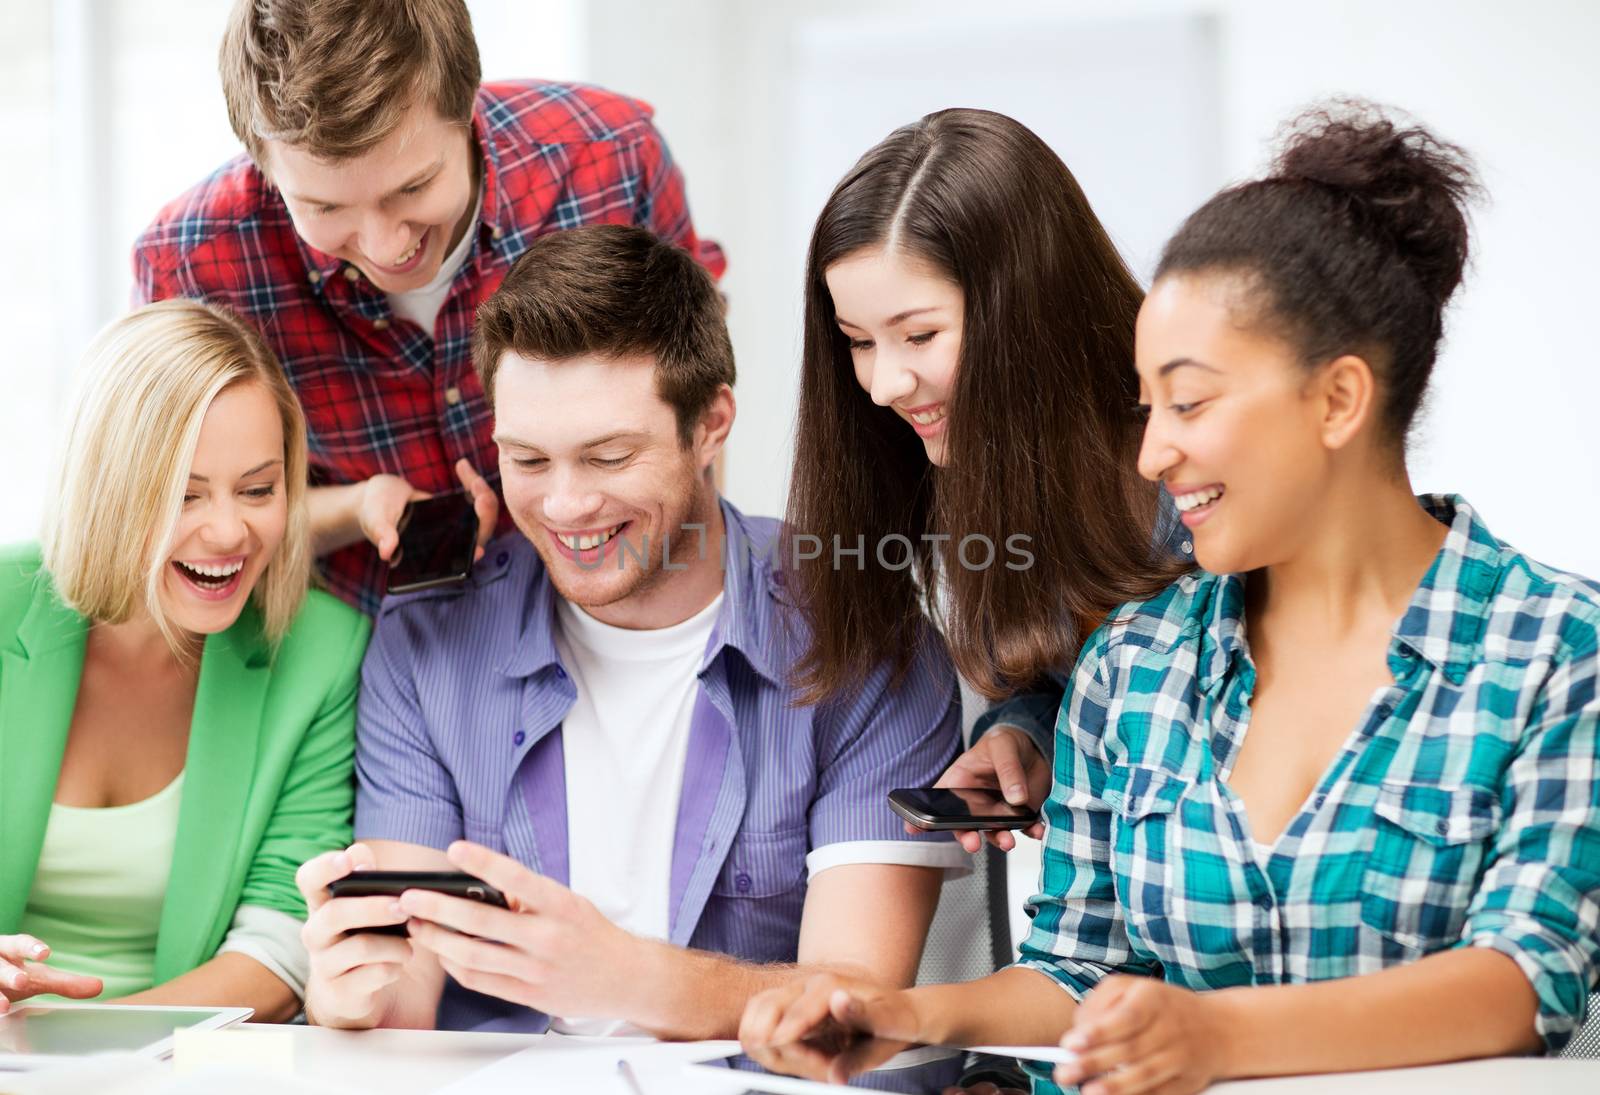 students looking at smartphone at school by dolgachov